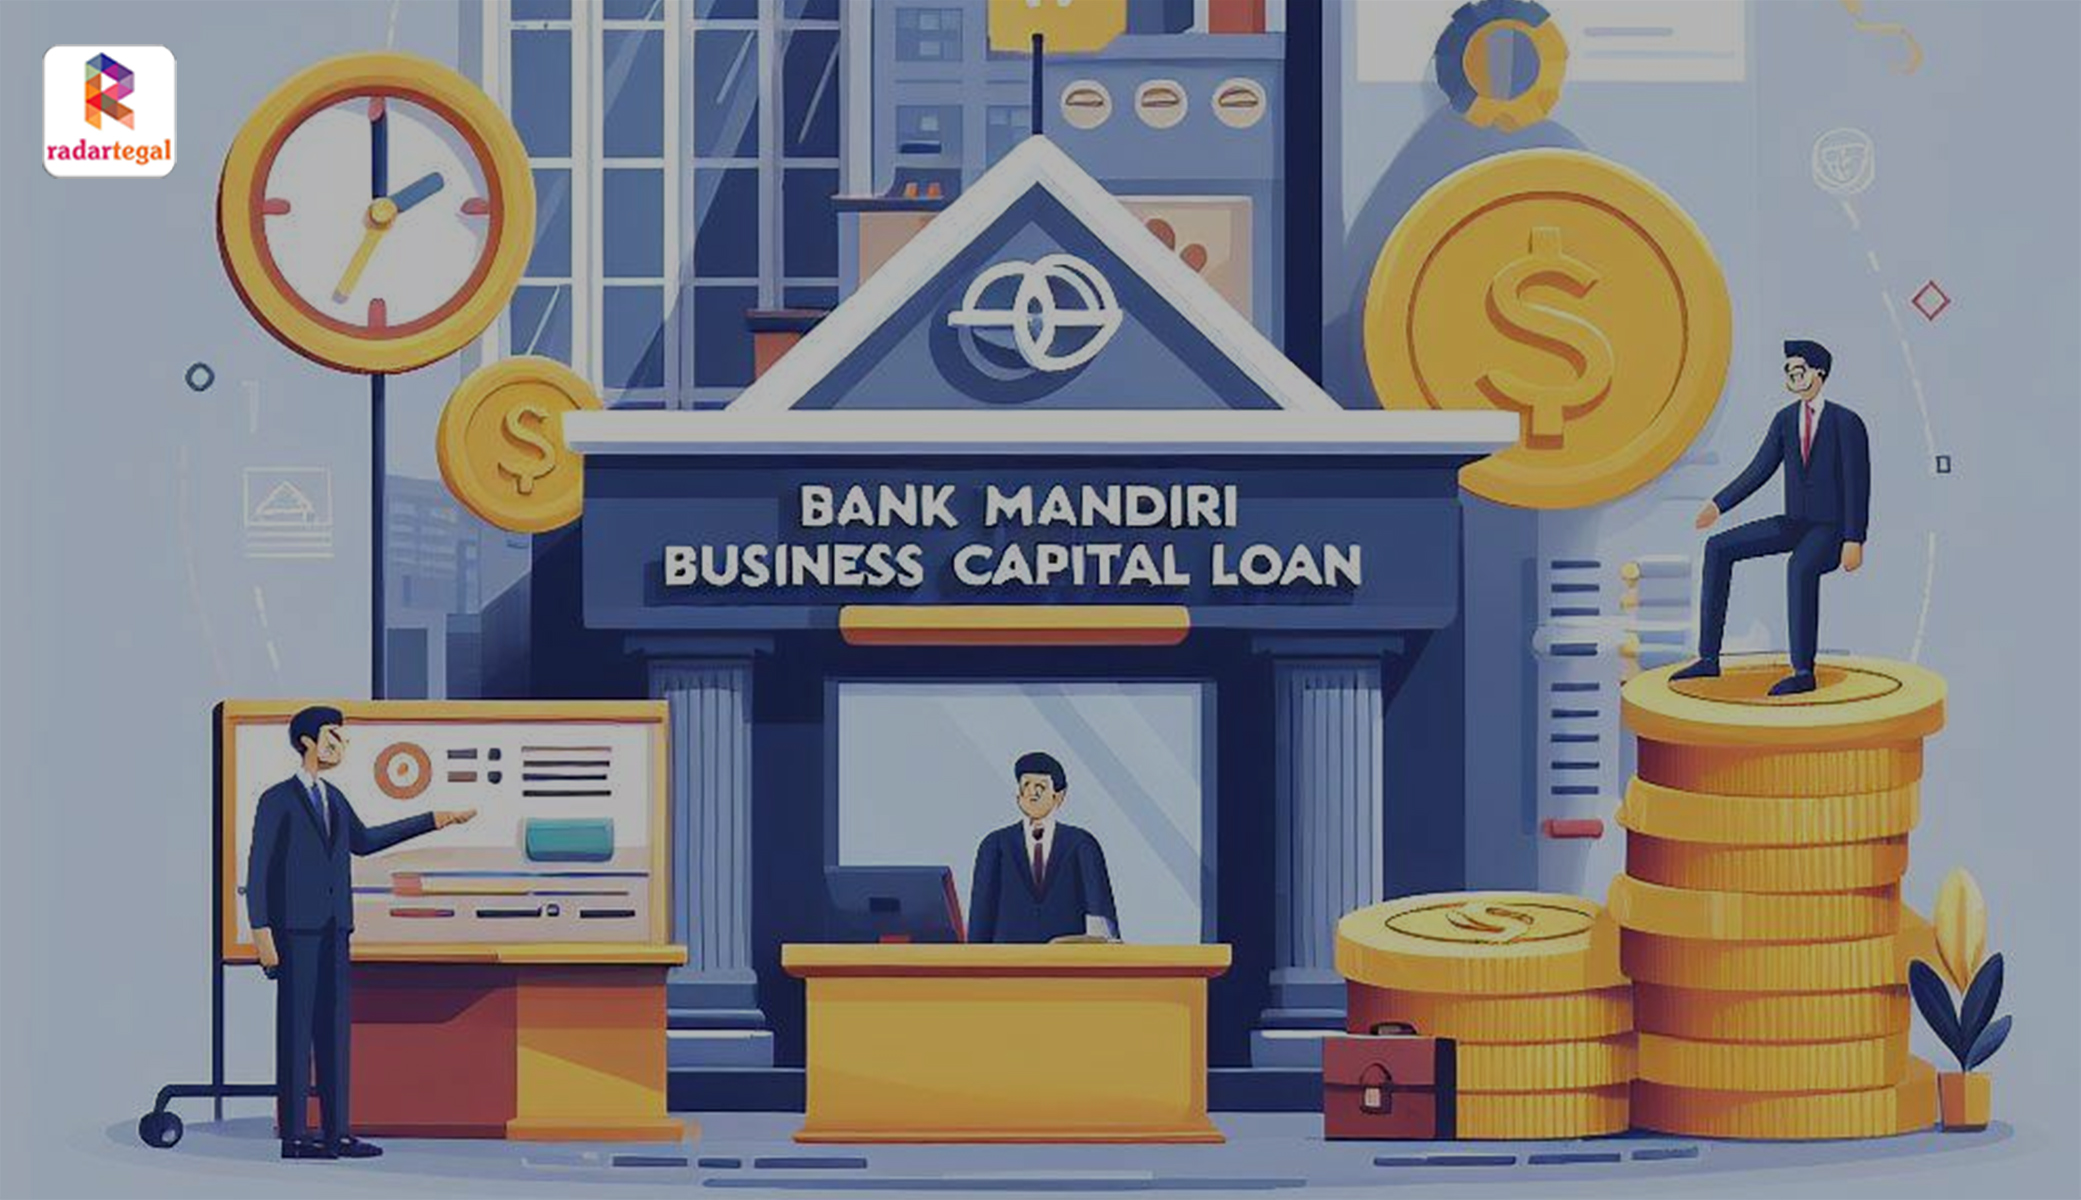 Pinjaman Modal Usaha Bank Mandiri Sangat Mudah Pengajuannya, Berikut Berkas-berkasnya Agar Cepat Cair